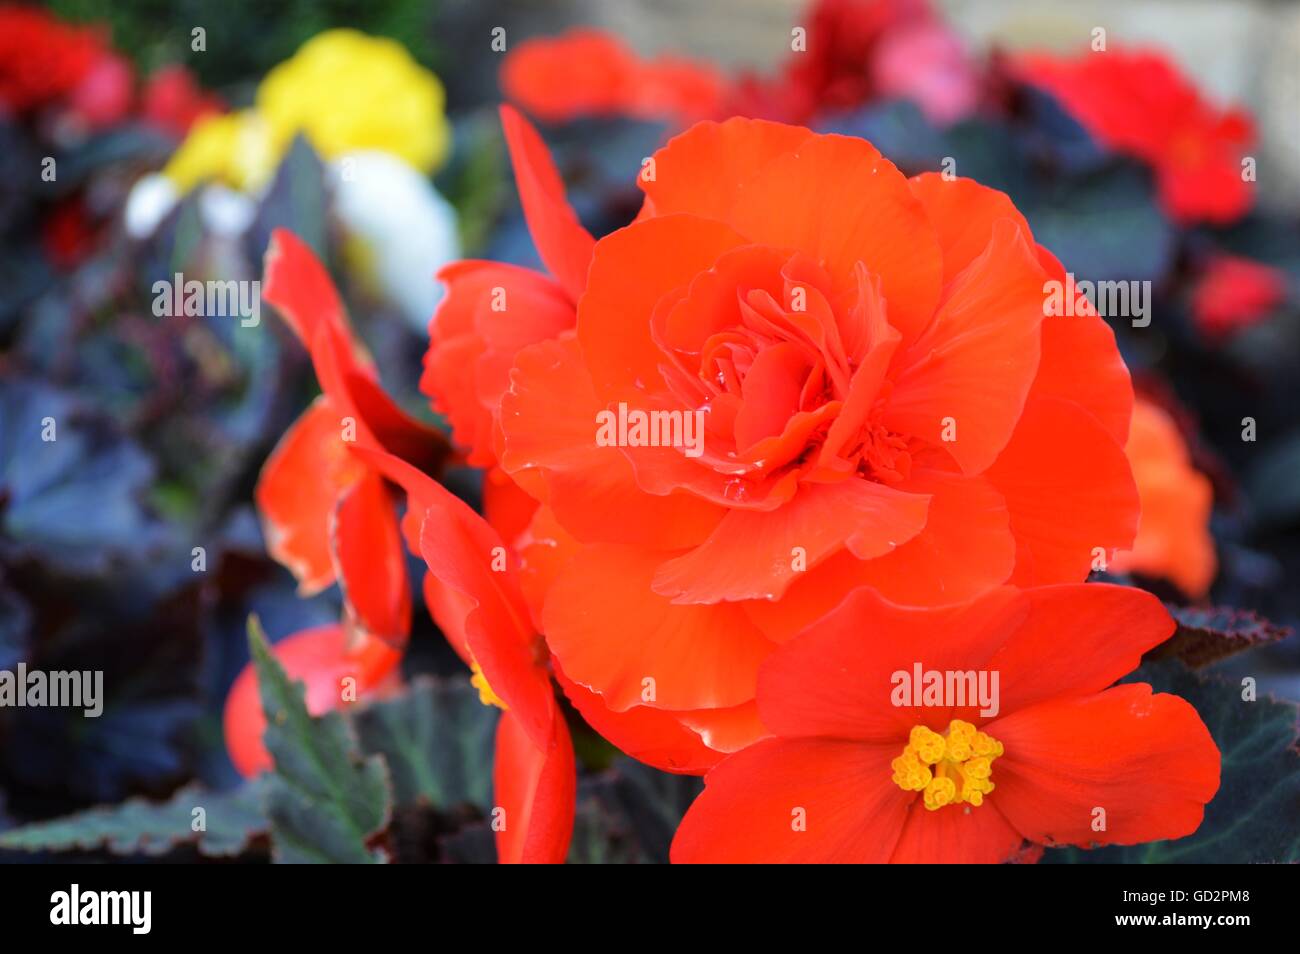 Red-Orange Flower in England Stock Photo